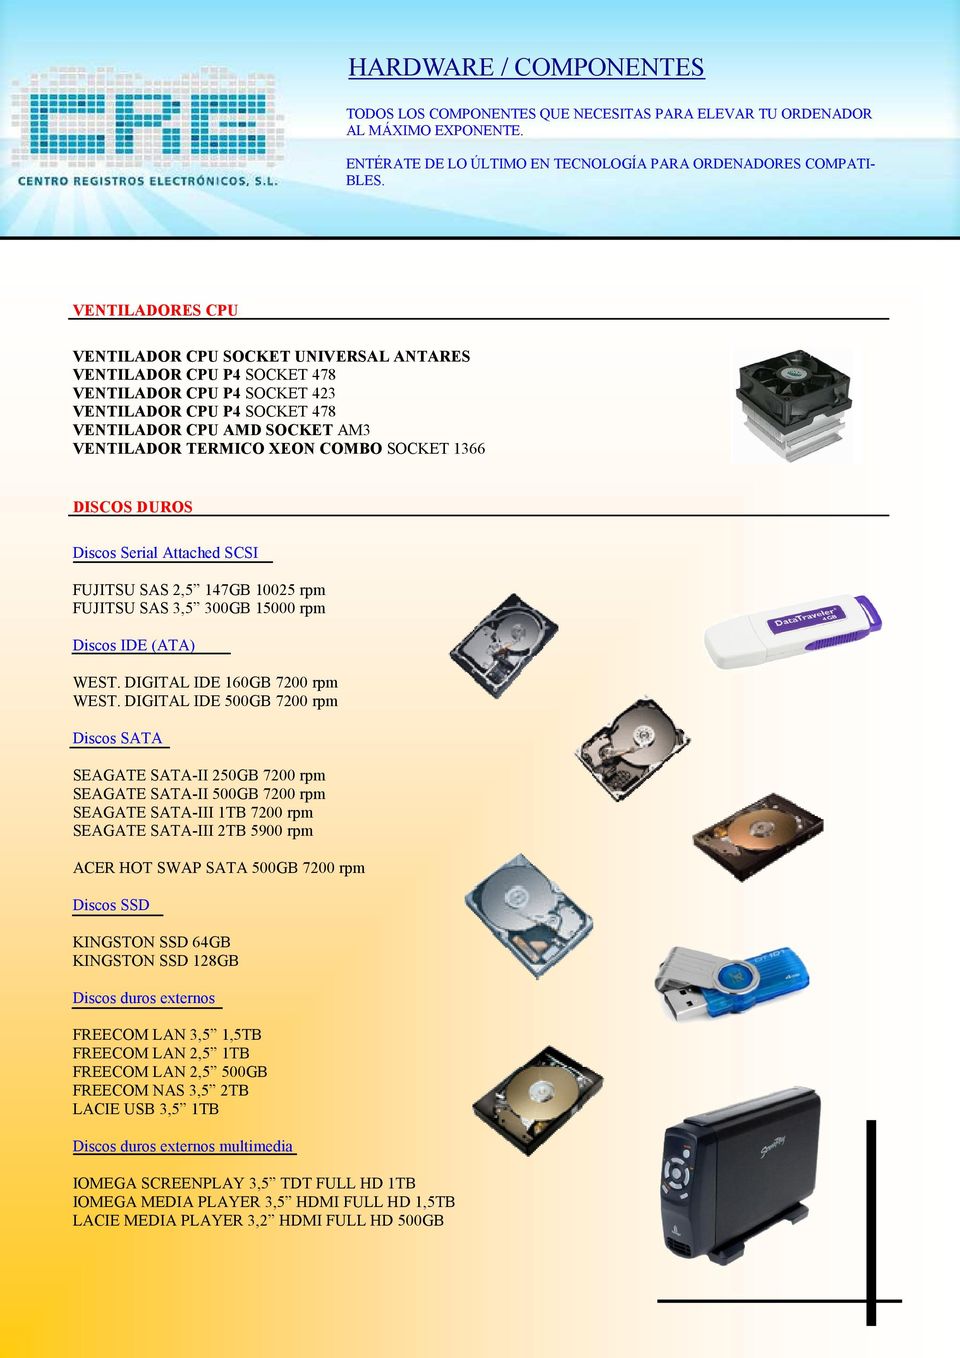 COMBO SOCKET 1366 DISCOS DUROS Discos Serial Attached SCSI FUJITSU SAS 2,5 147GB 10025 rpm FUJITSU SAS 3,5 300GB 15000 rpm Discos IDE (ATA) WEST. DIGITAL IDE 160GB 7200 rpm WEST.